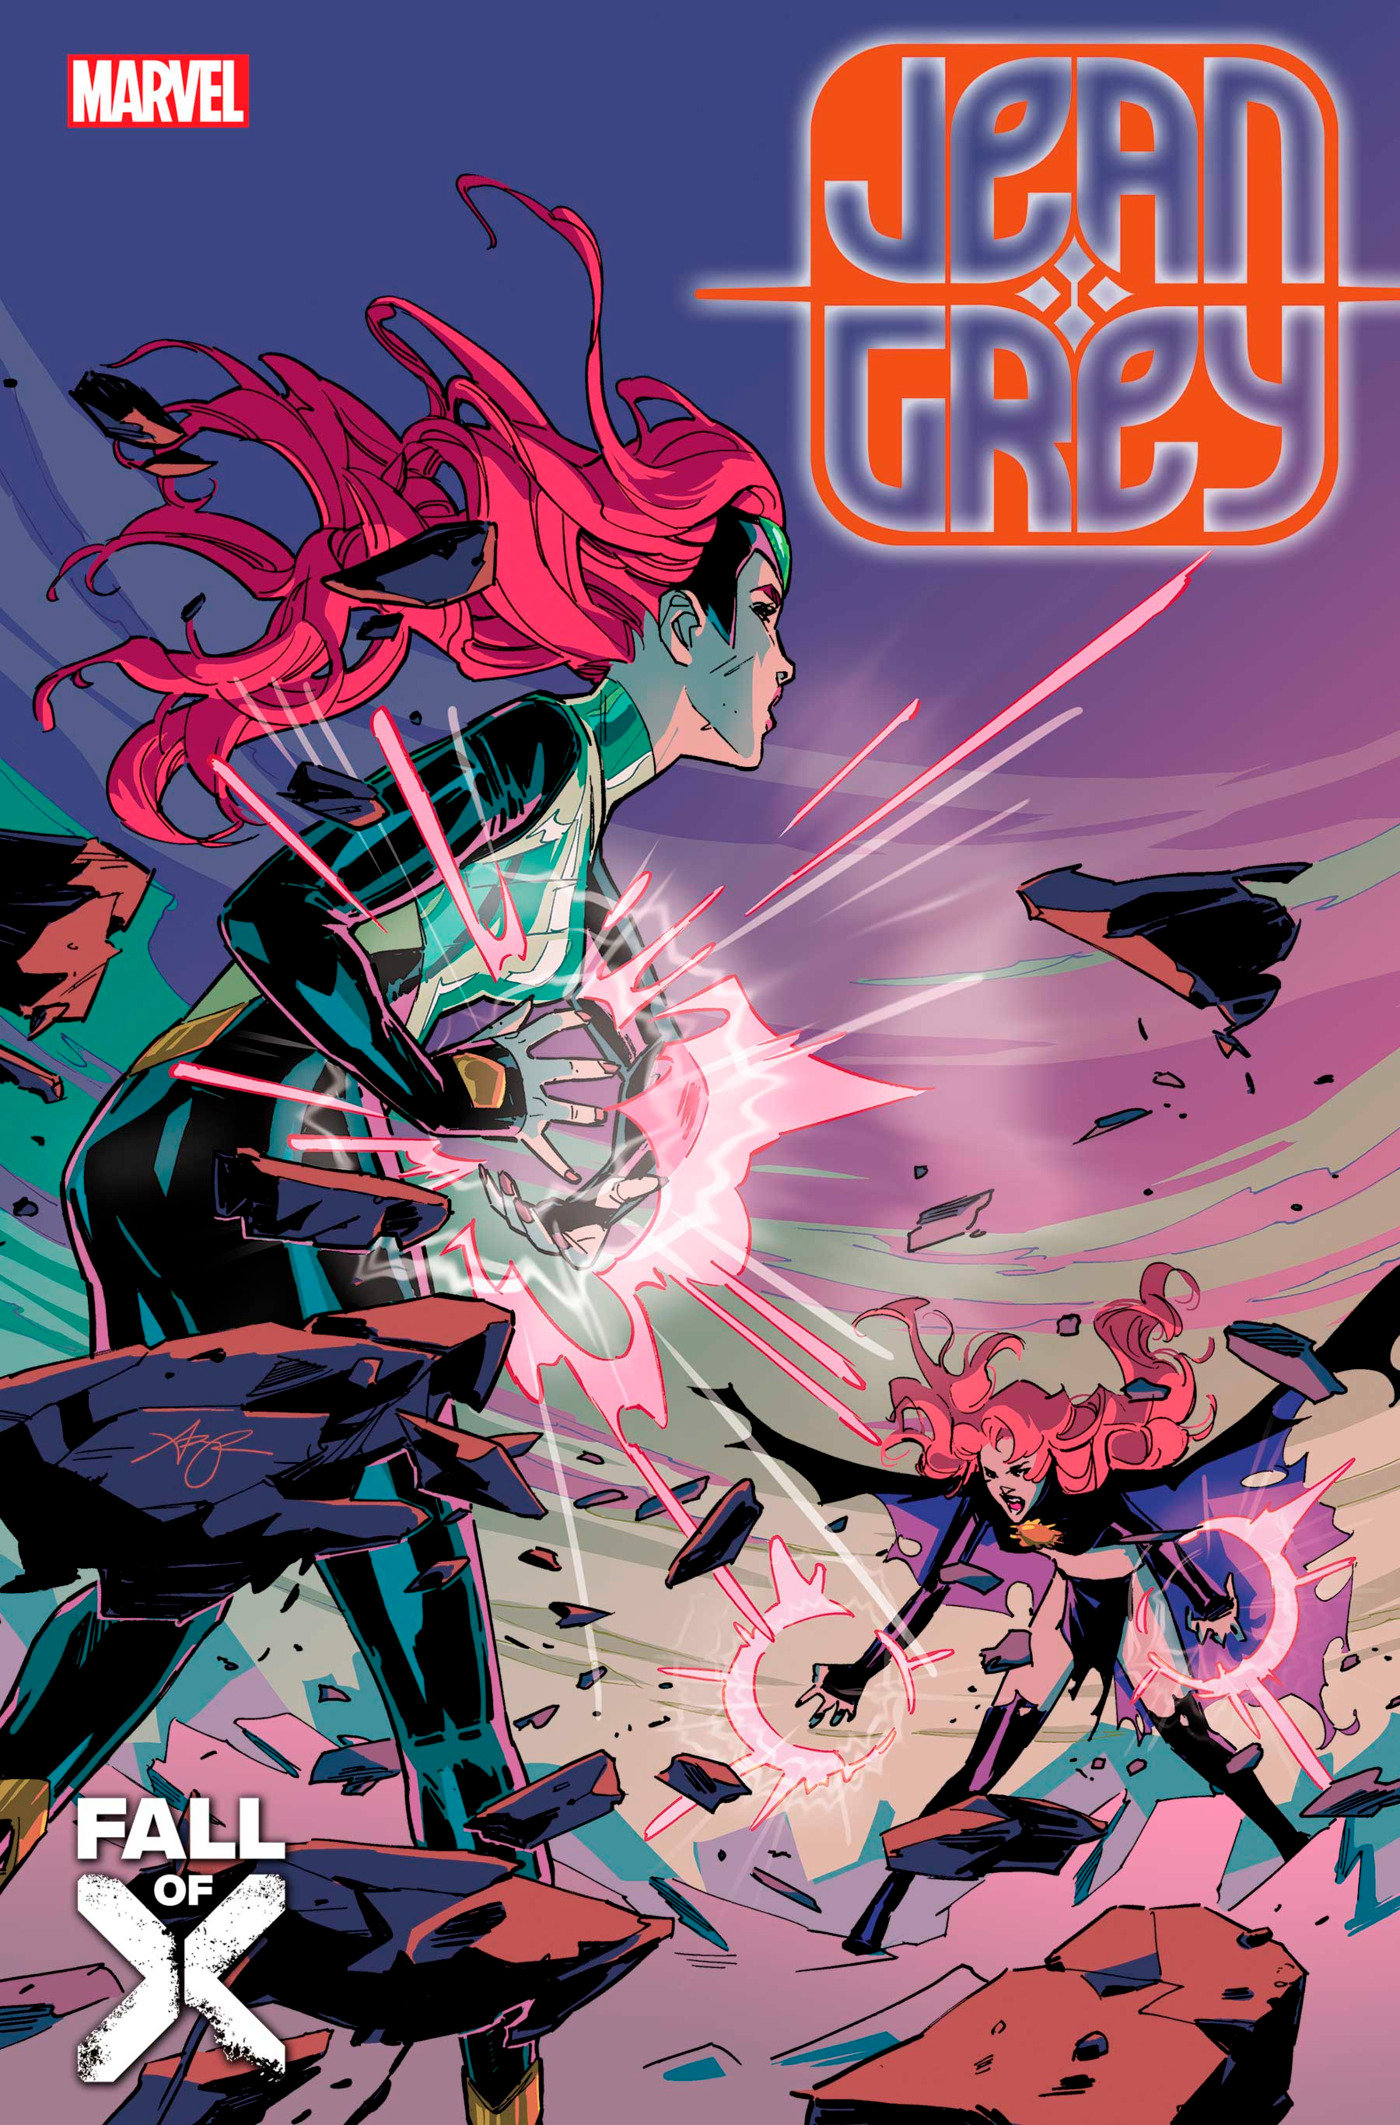 Jean Grey #3 (Fall of the X-Men)